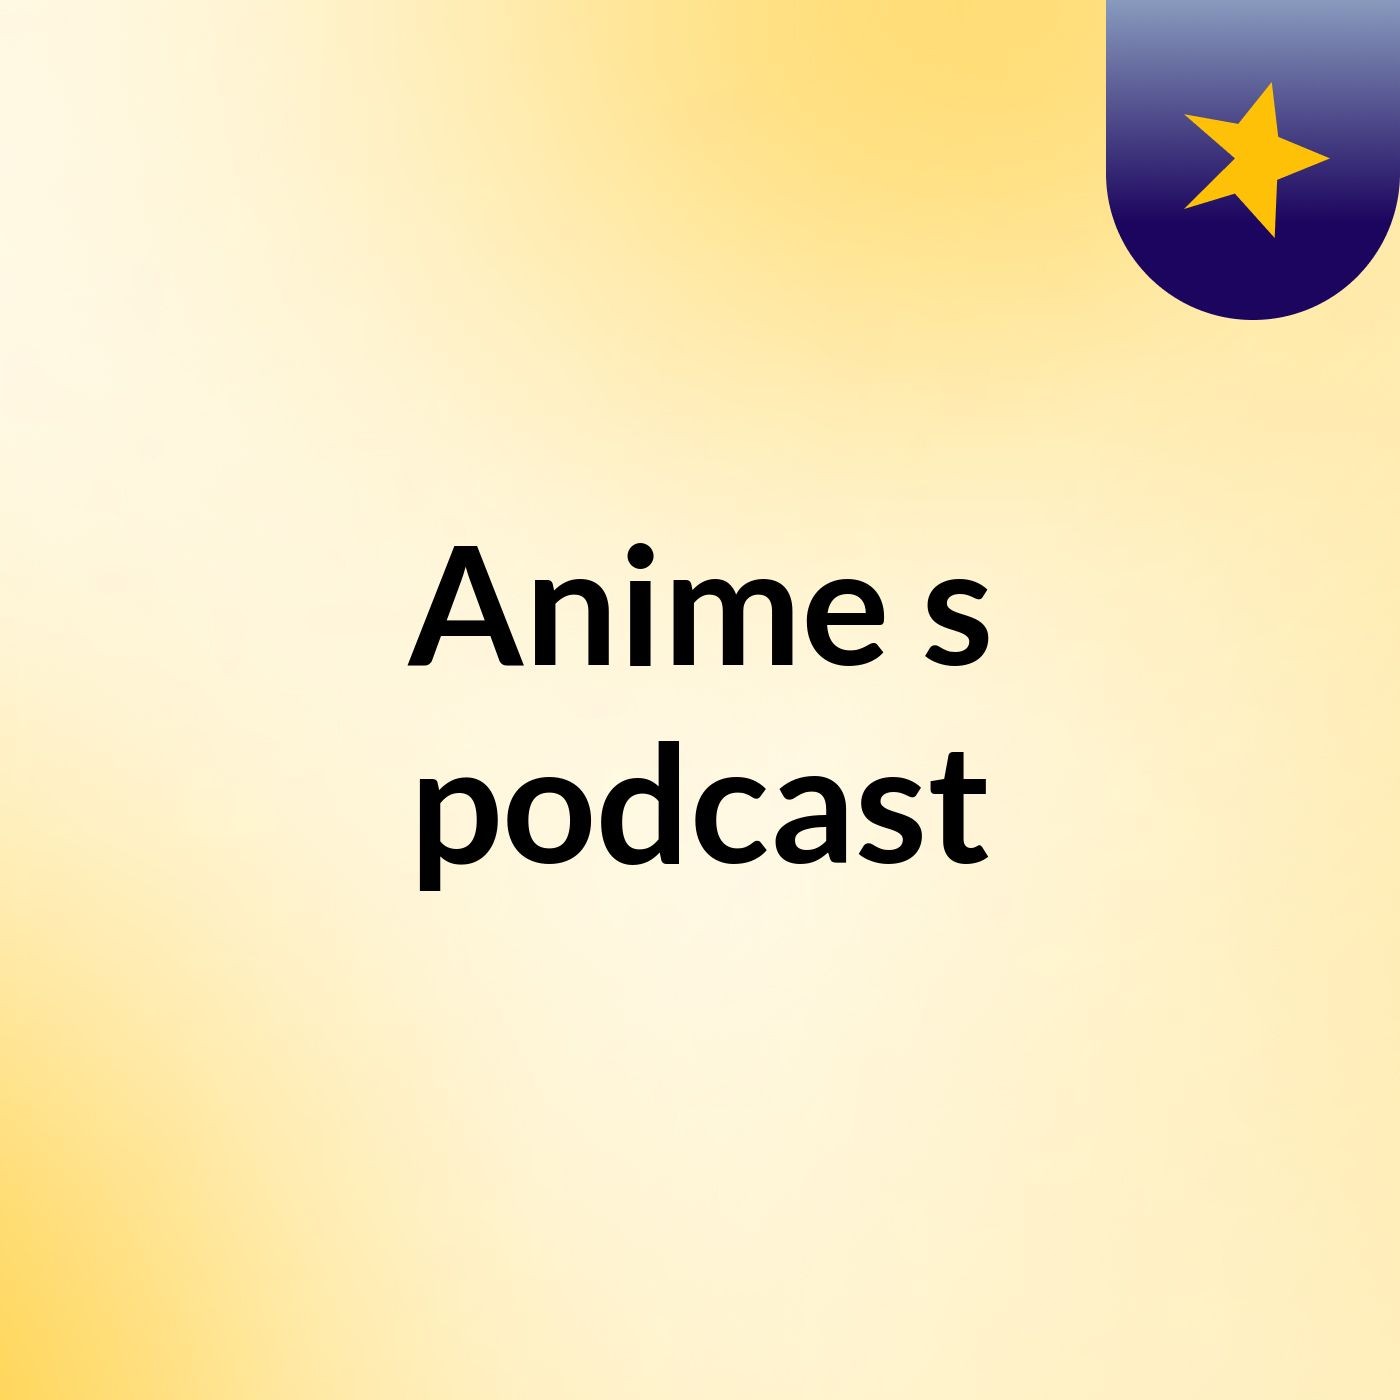 Anime's podcast